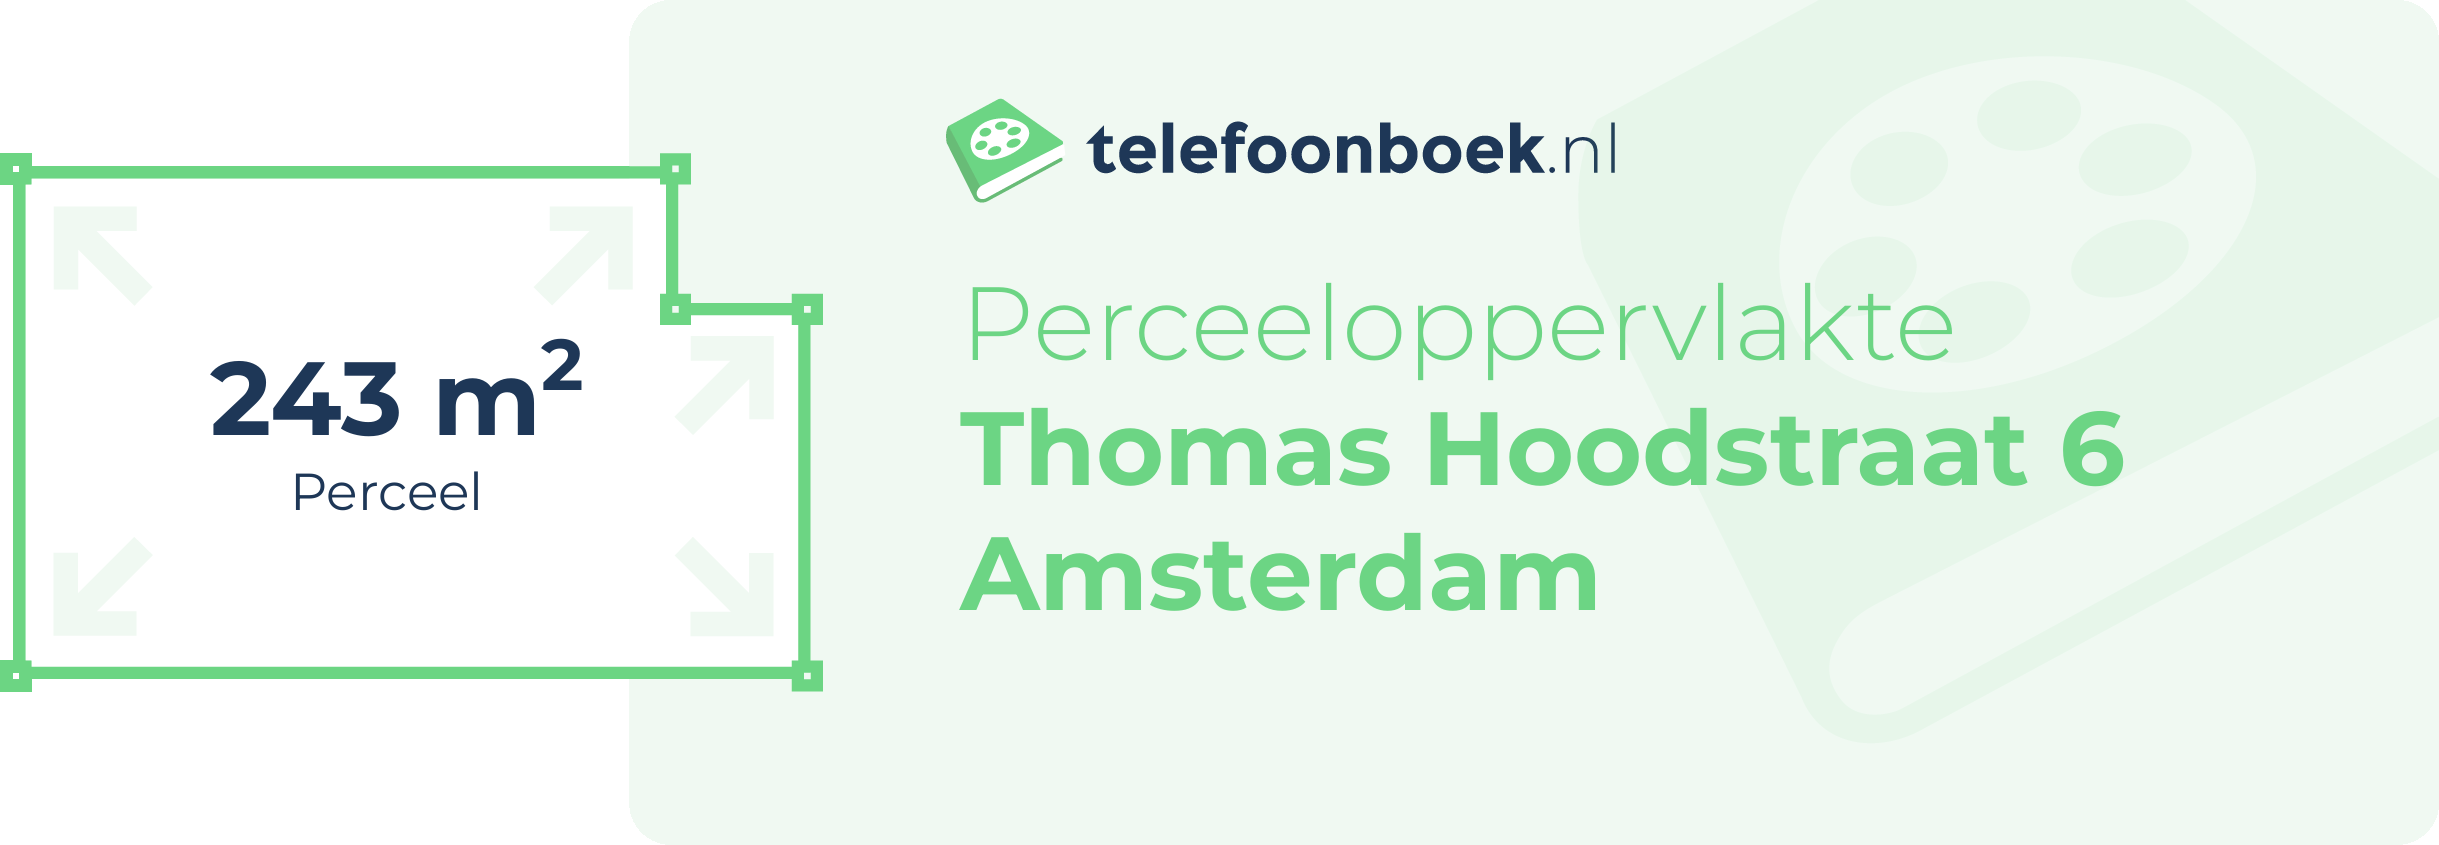 Perceeloppervlakte Thomas Hoodstraat 6 Amsterdam